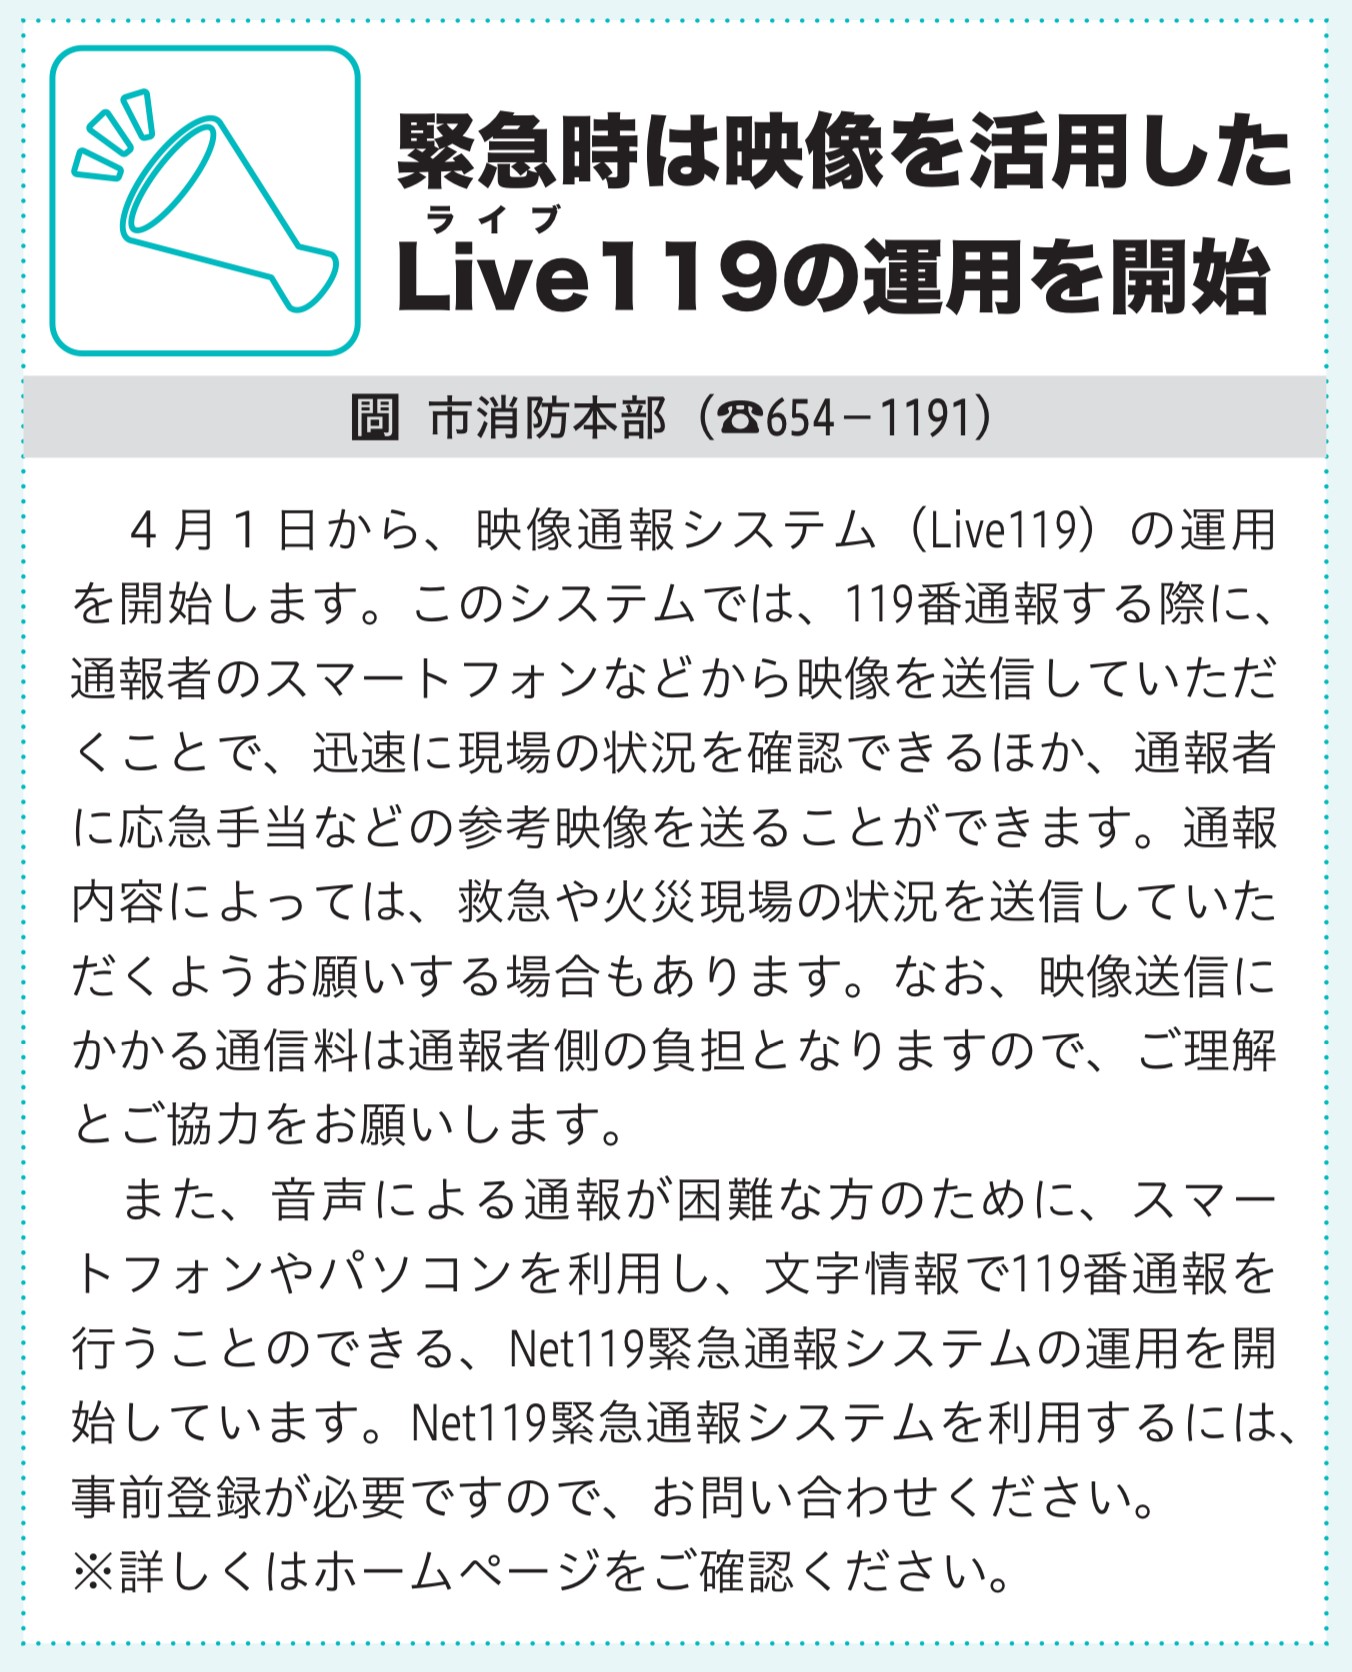 市報_Live119